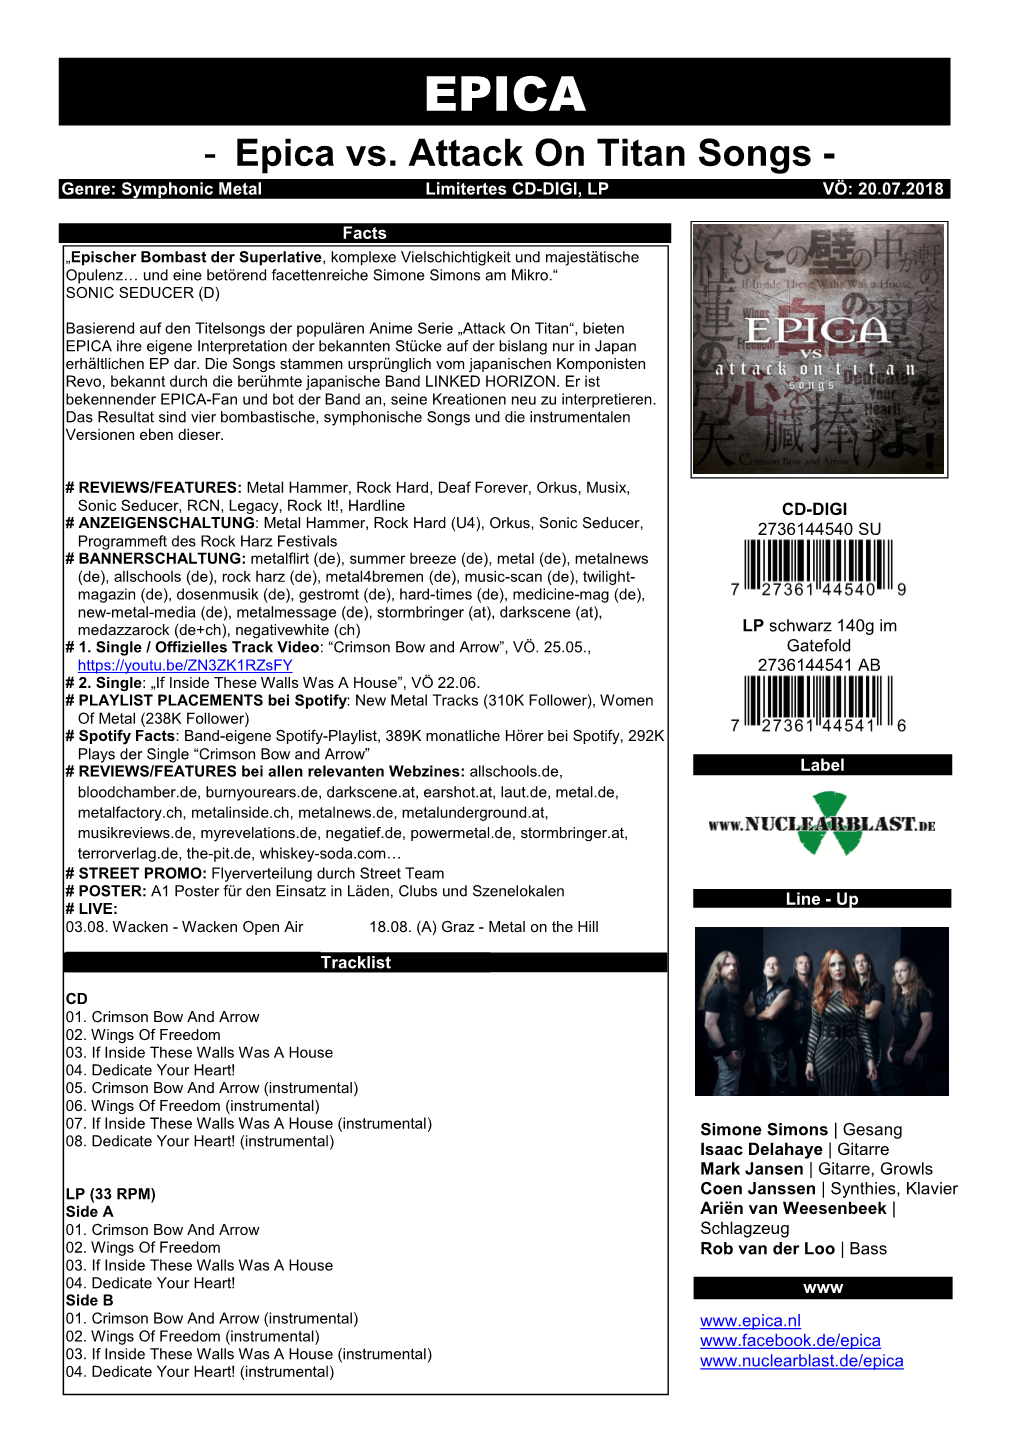 Epica Vs. Attack on Titan Songs - Genre: Symphonic Metal Limitertes CD-DIGI, LP VÖ: 20.07.2018